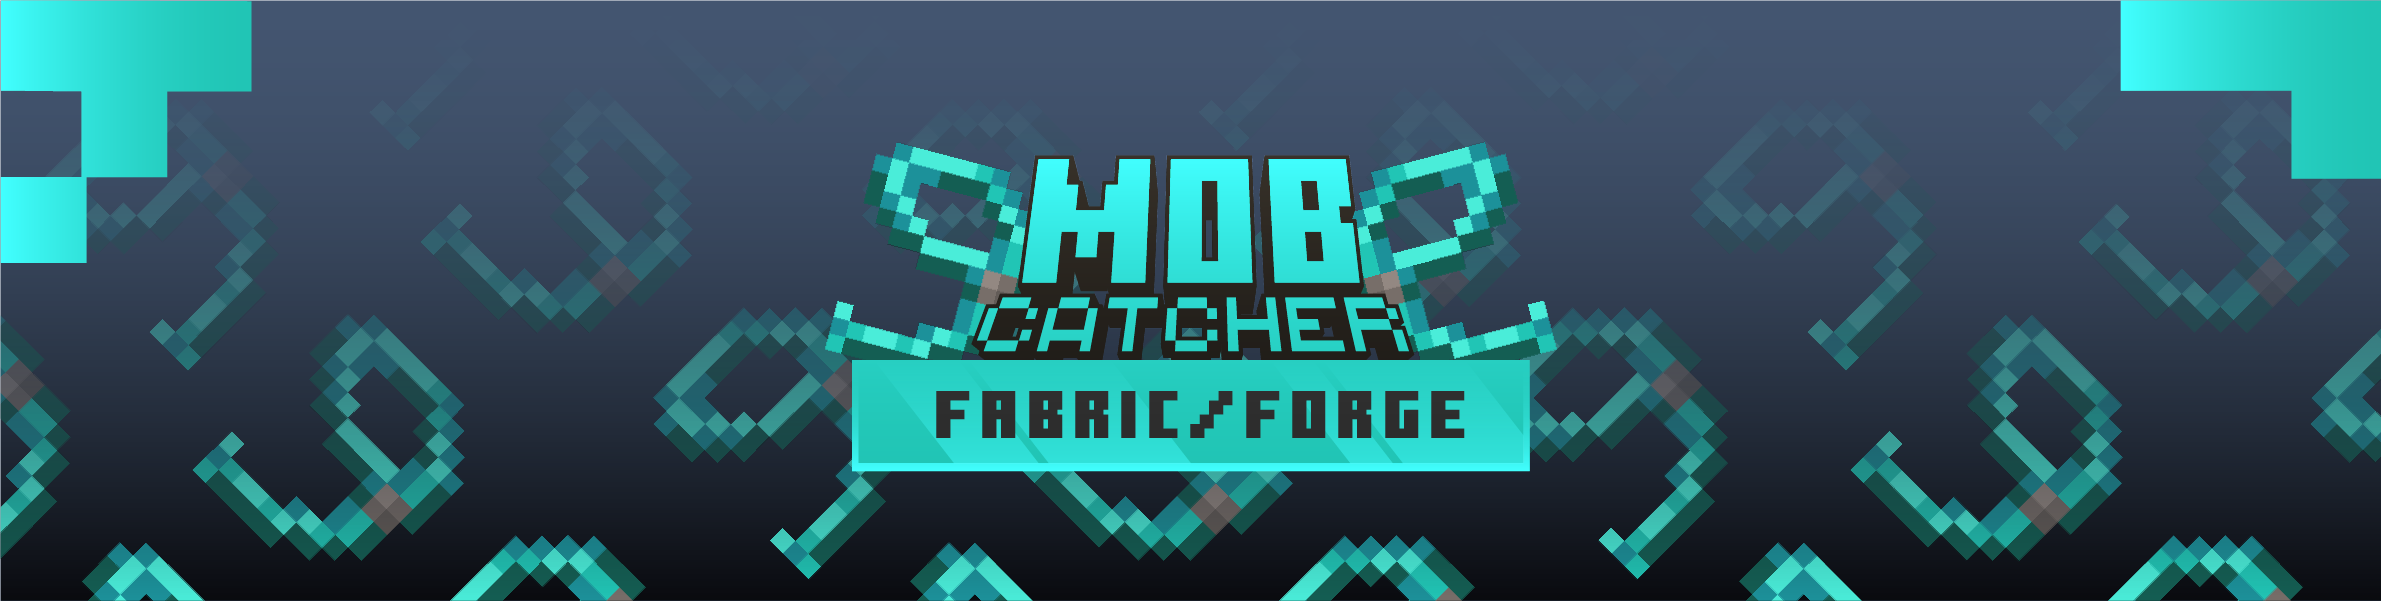 Player Mobs - Minecraft Mods - CurseForge